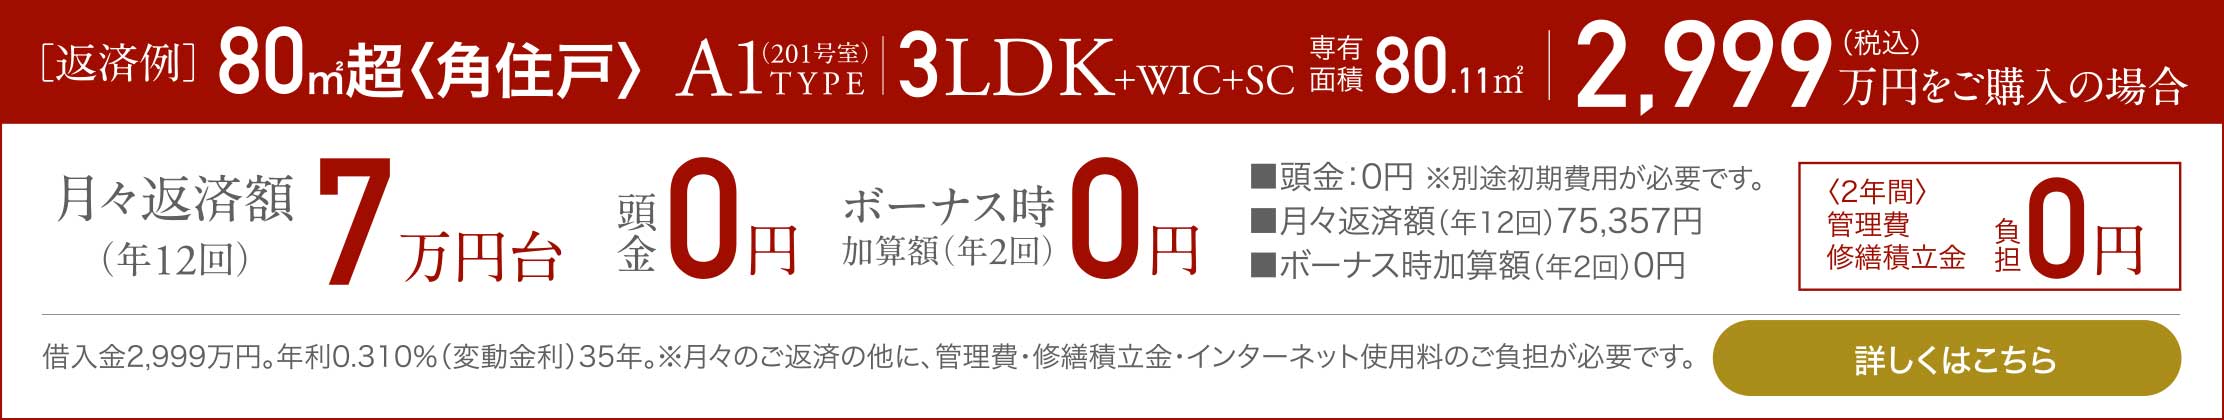 3LDK＋WTC　予定販売価格 税込2,800万円台〜